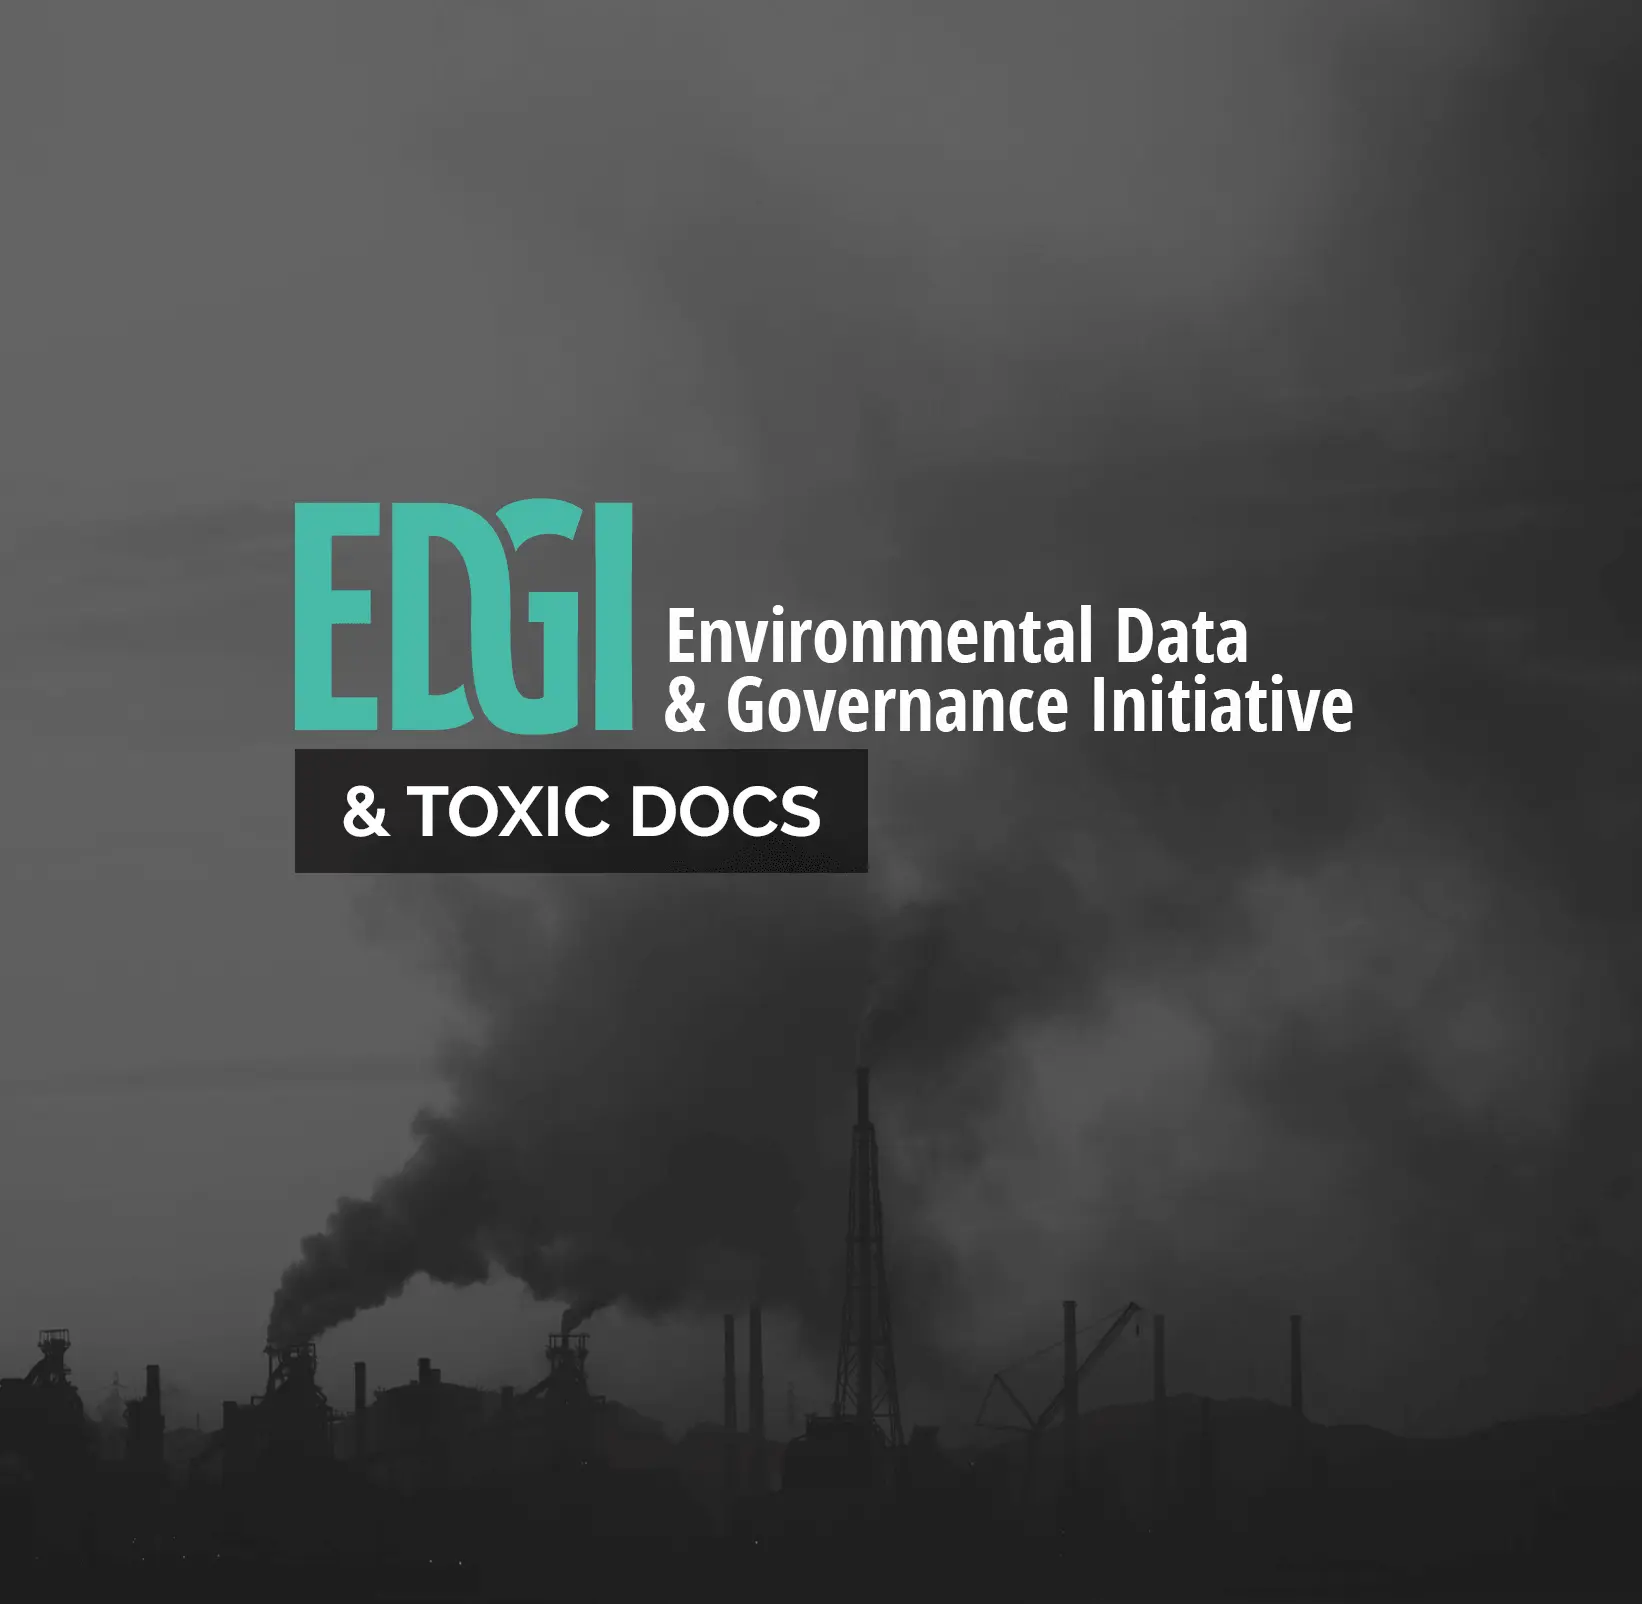 EDGI: Environmental Data & Governance Initiative & Toxic Docs